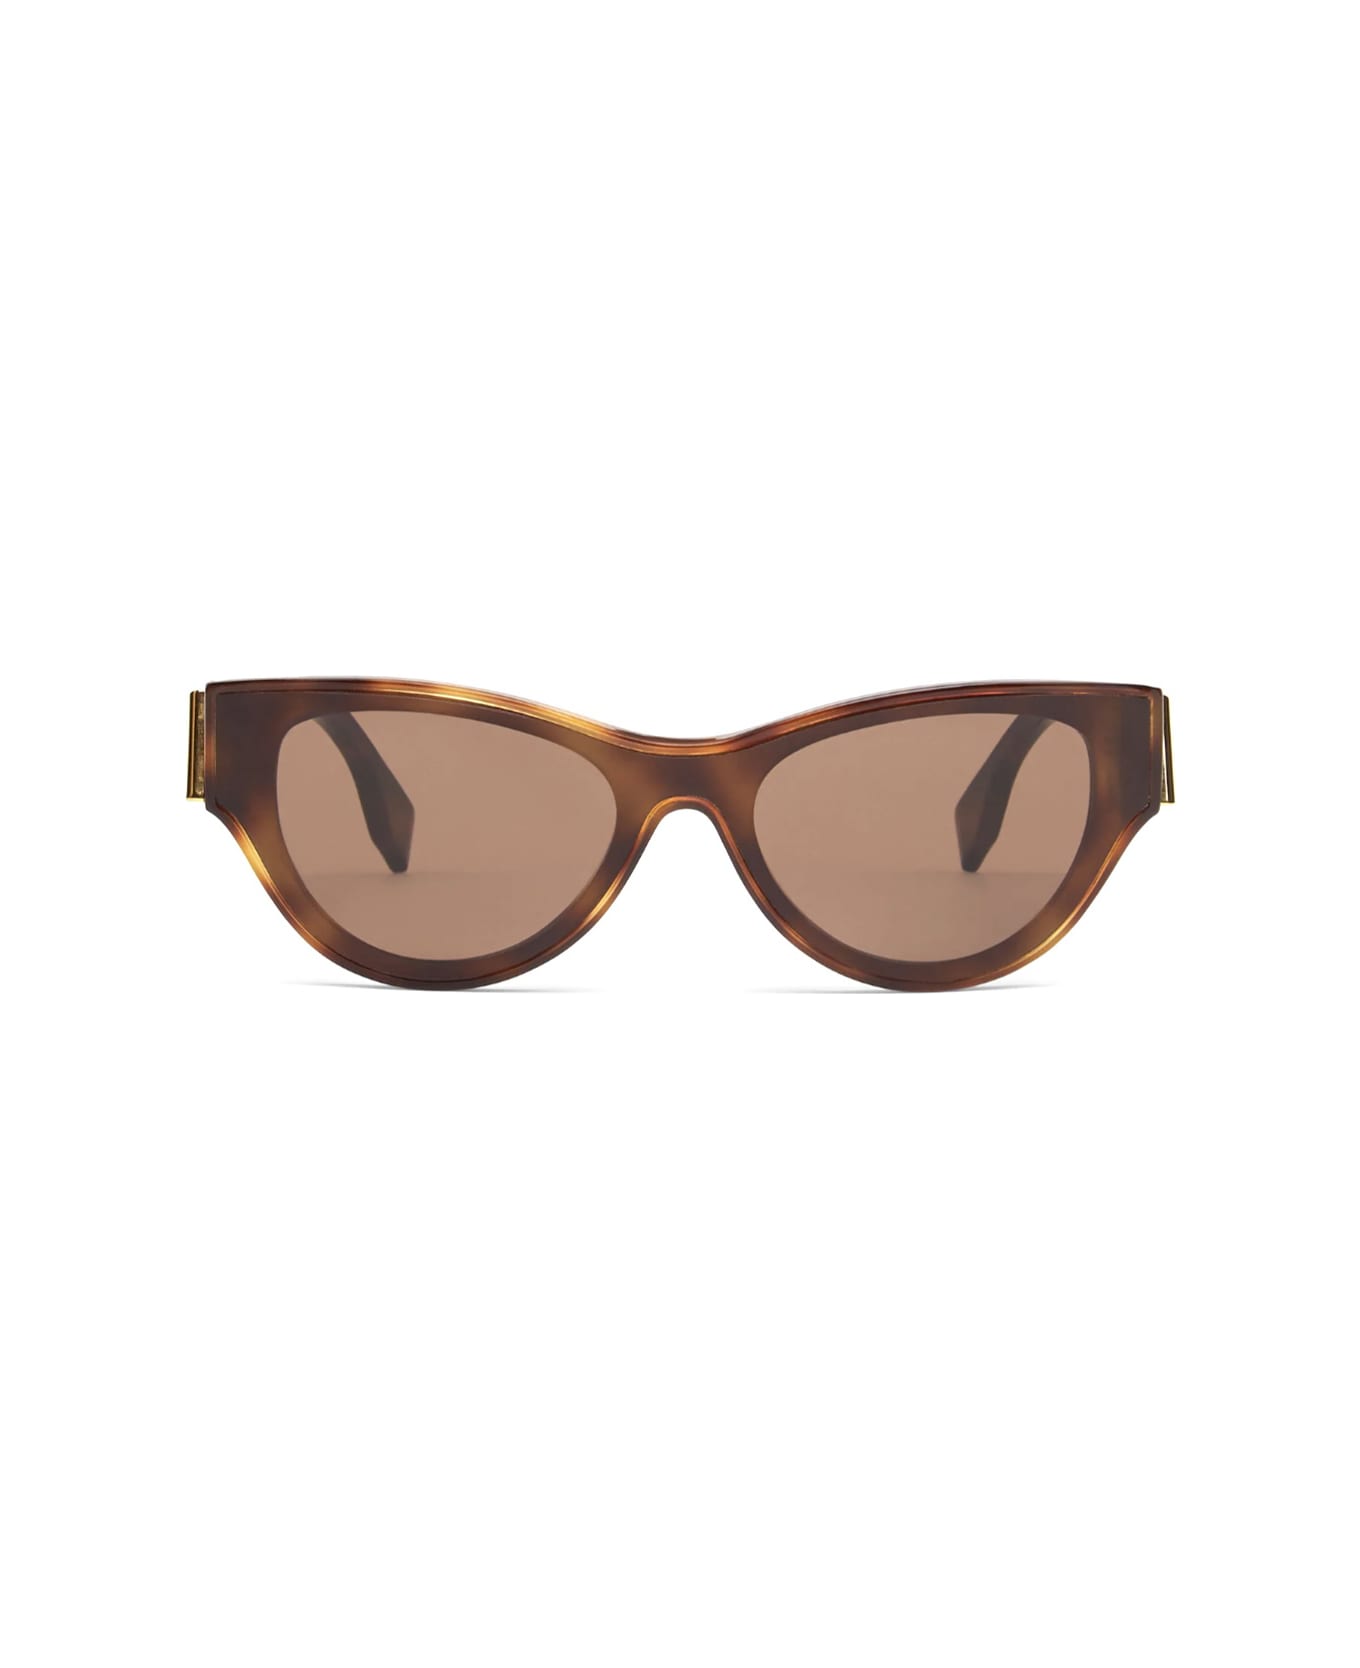 Fendi Eyewear Fe40135i 53e Sunglasses - Marrone